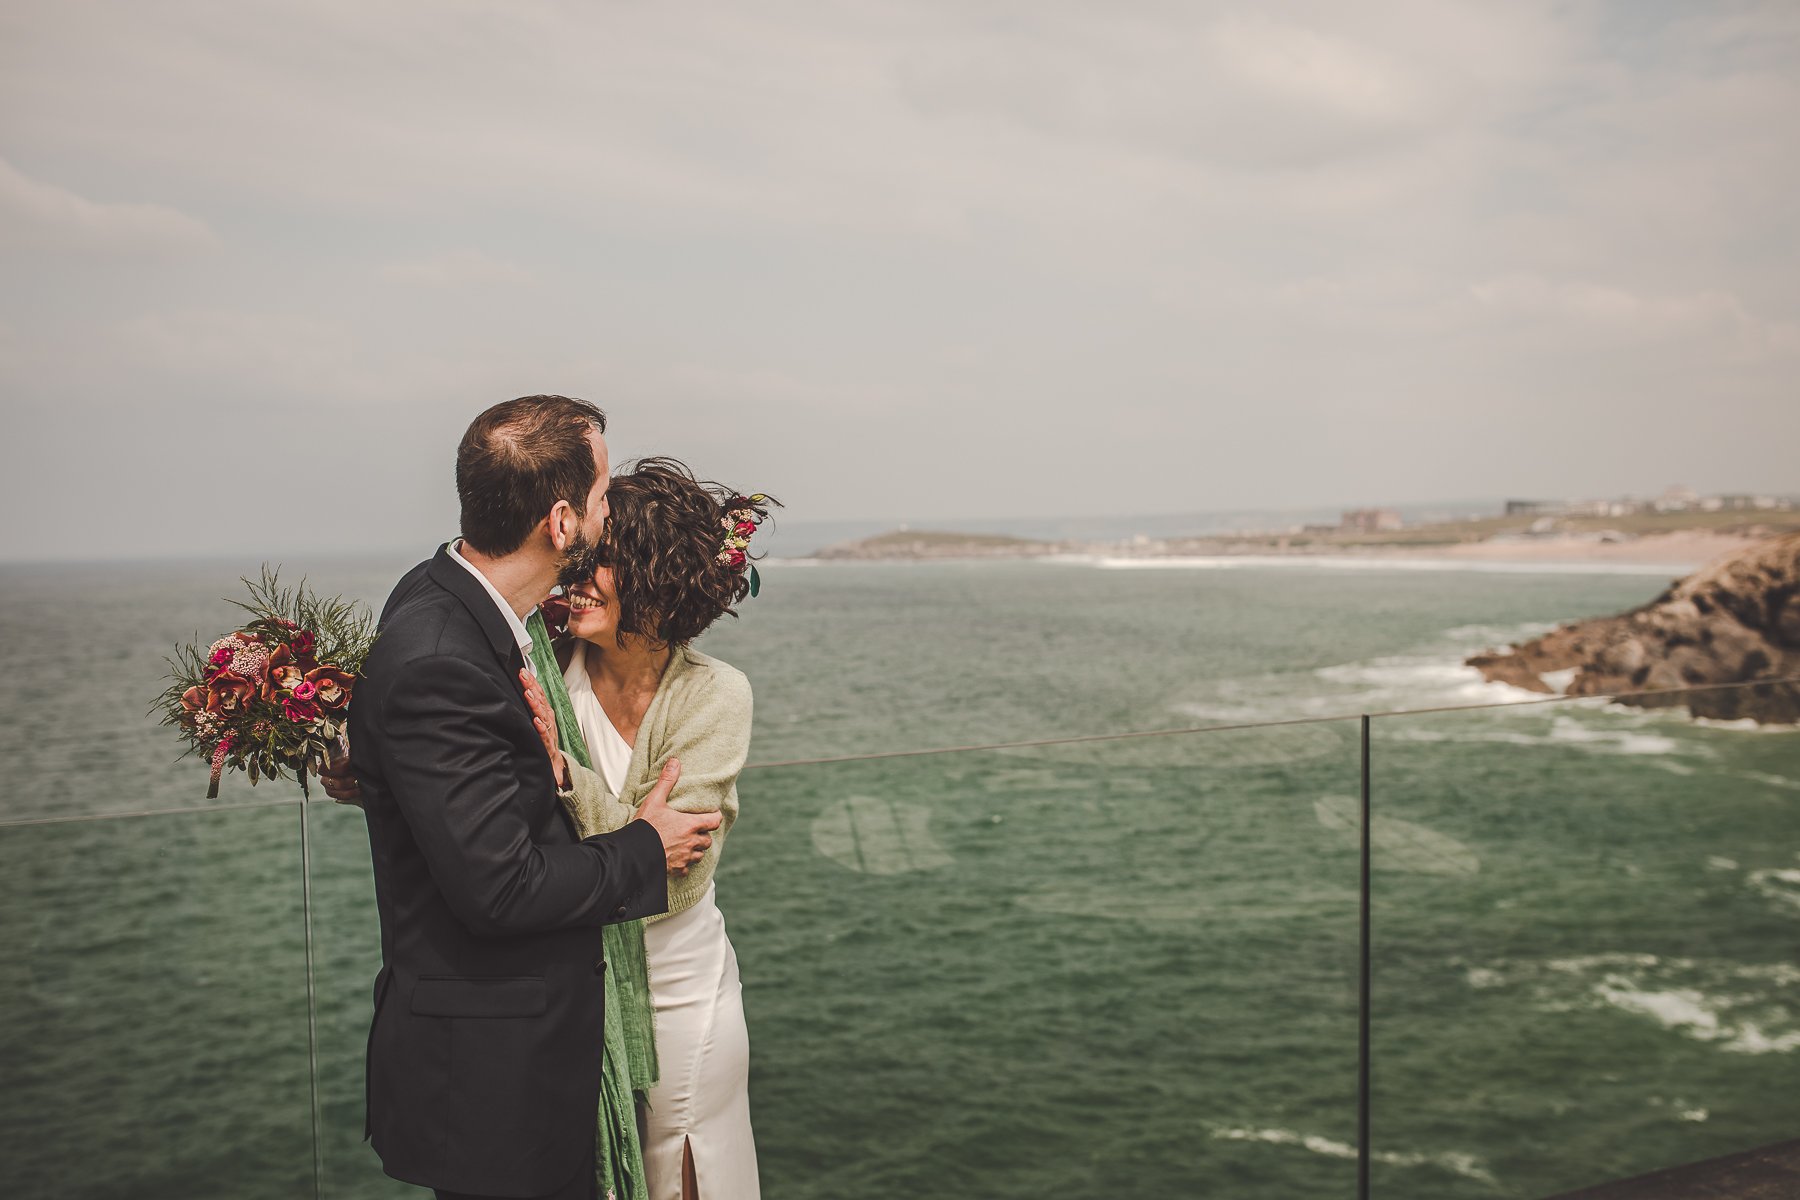 Cornwall wedding photographer - U got the love 03.jpg